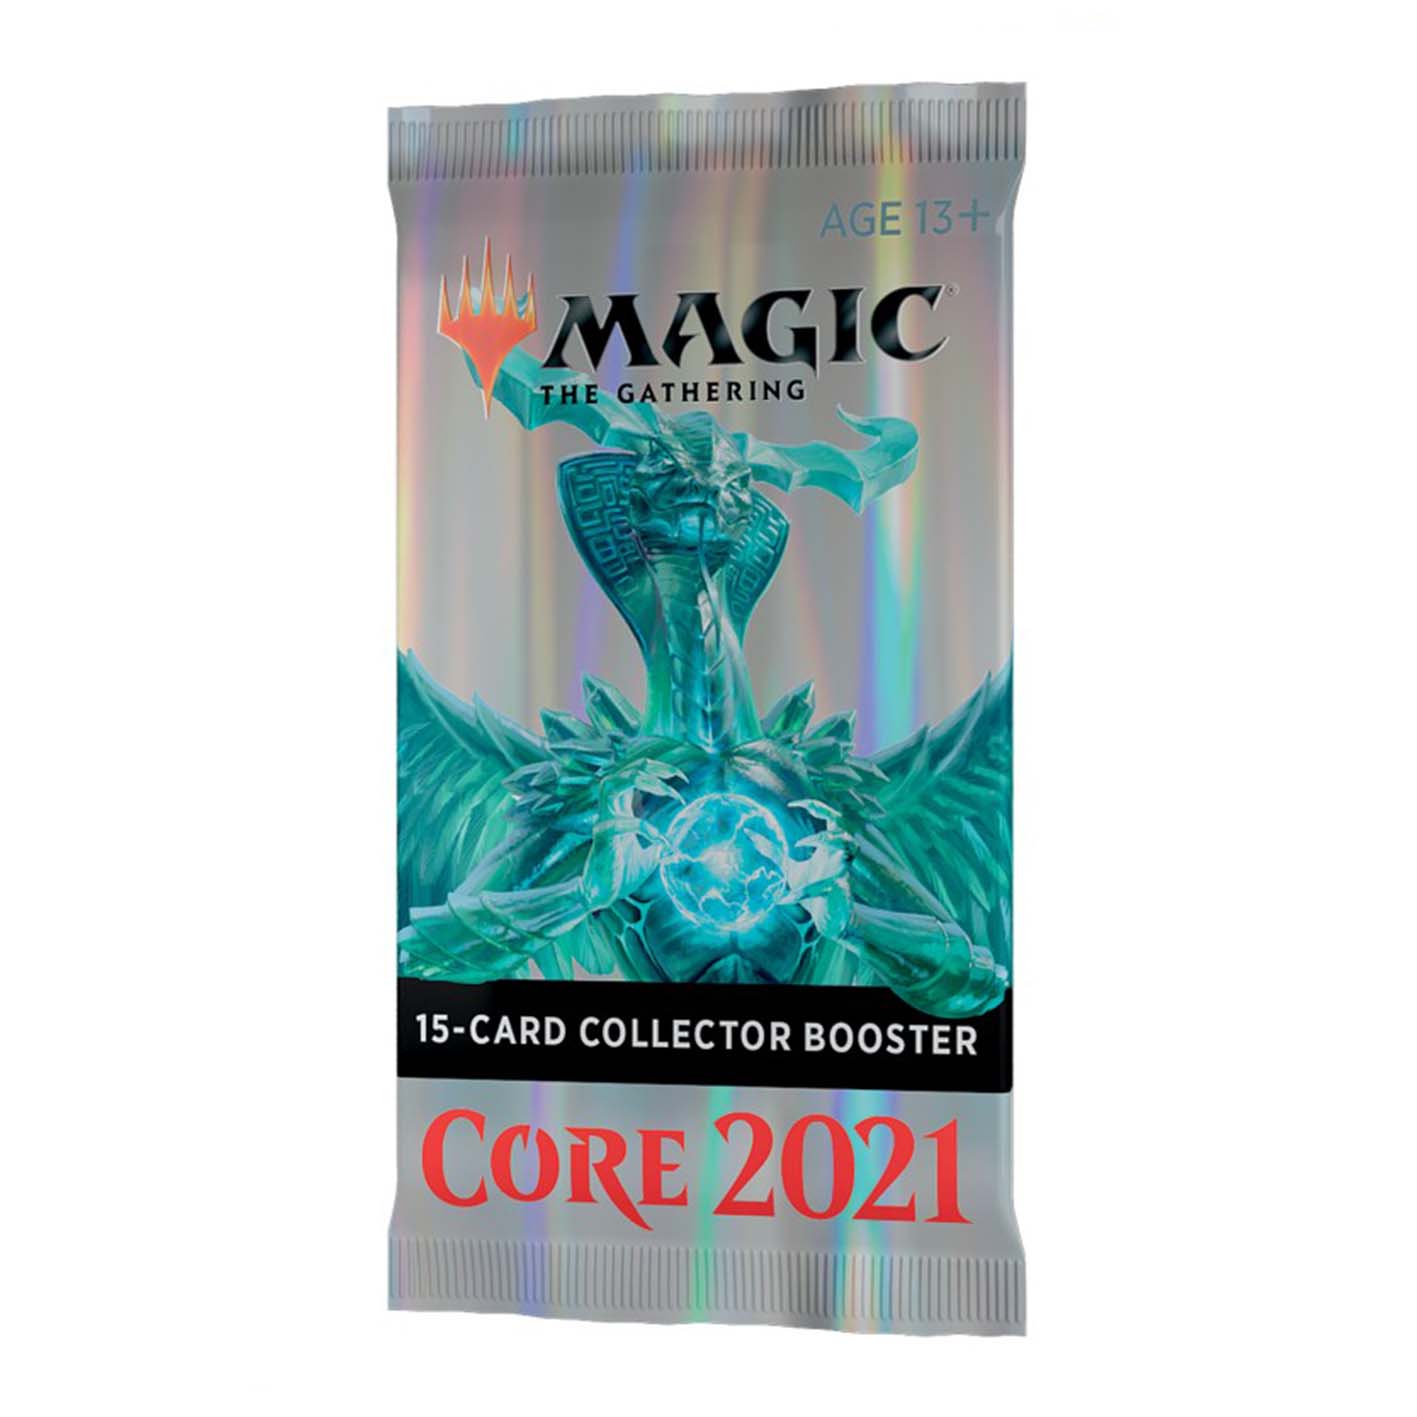 Boite de Collector Booster Magic 2021